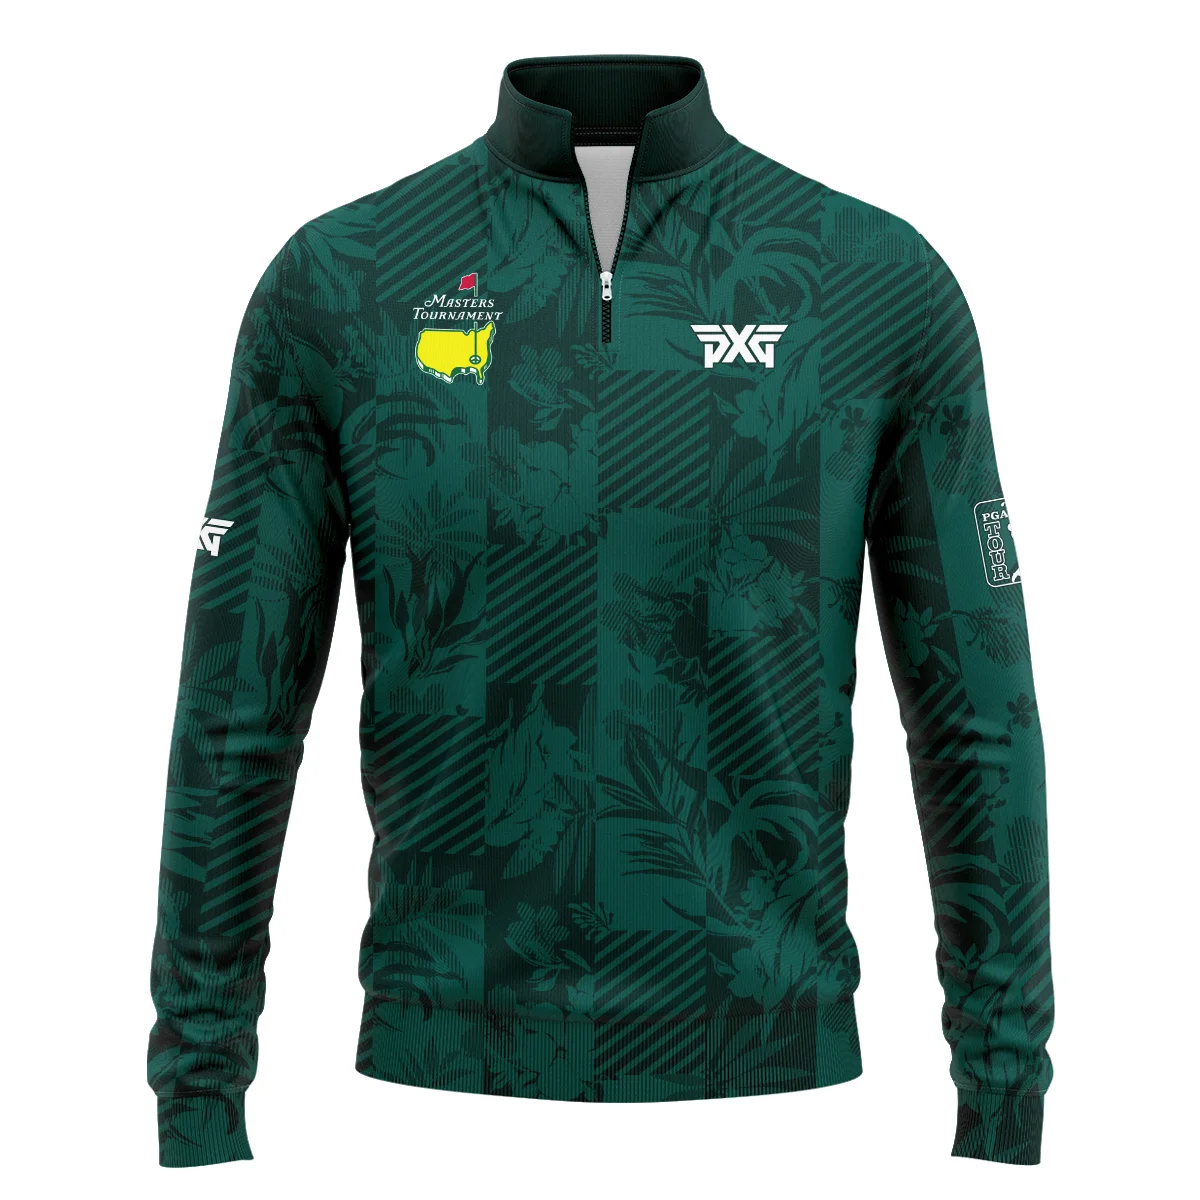 Tropical Leaves ,Foliage With Geometric Stripe Pattern Golf Masters Tournament Unisex Sweatshirt Style Classic Sweatshirt